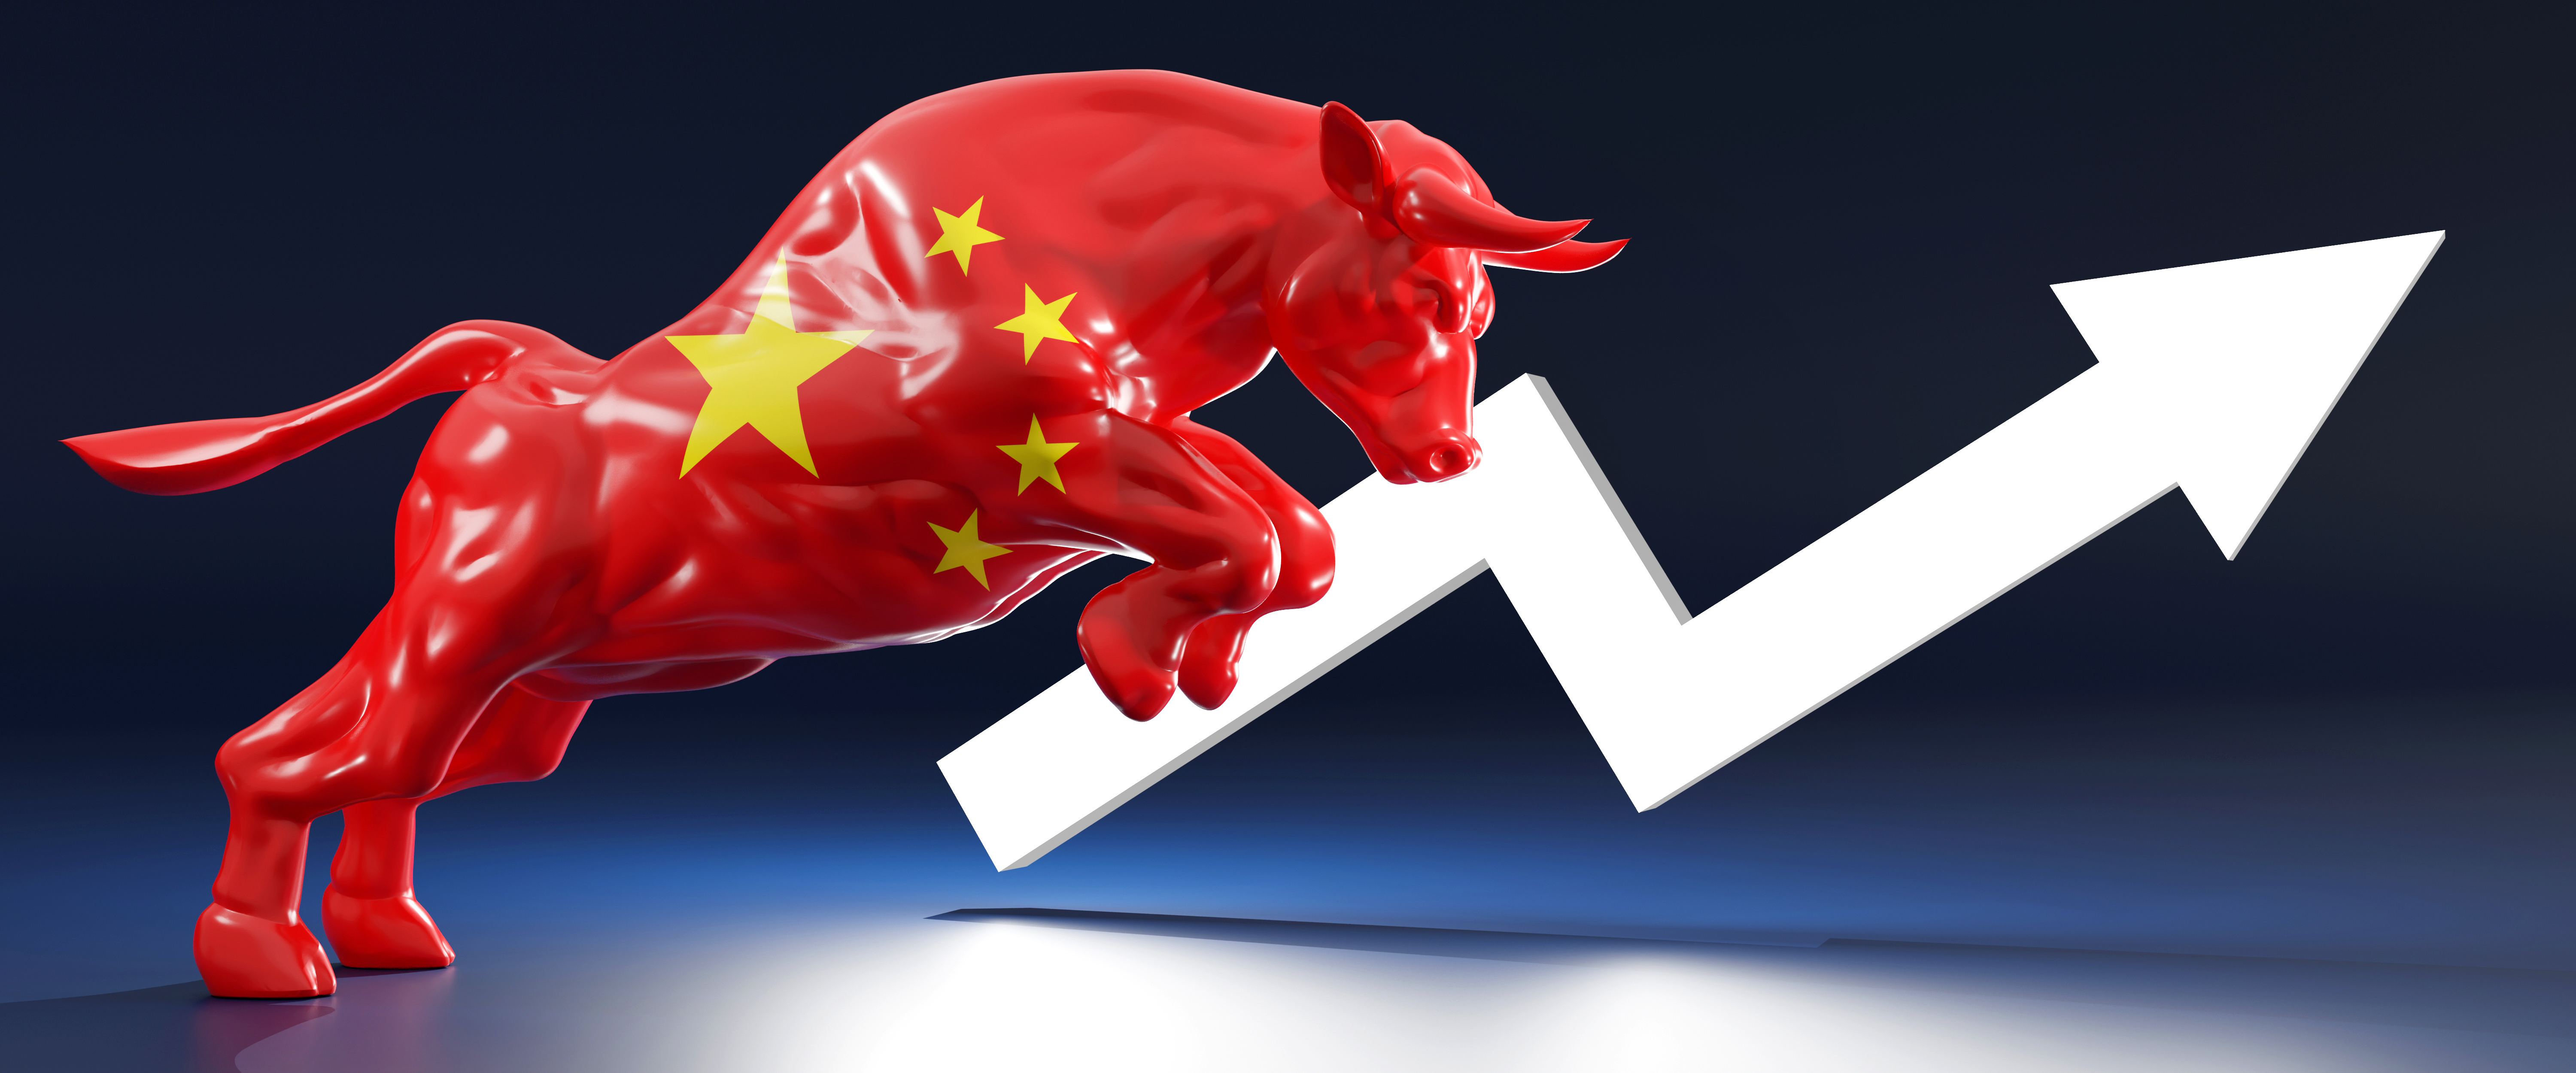 Beleggen in China via etf’s: vier keer vraag en antwoord